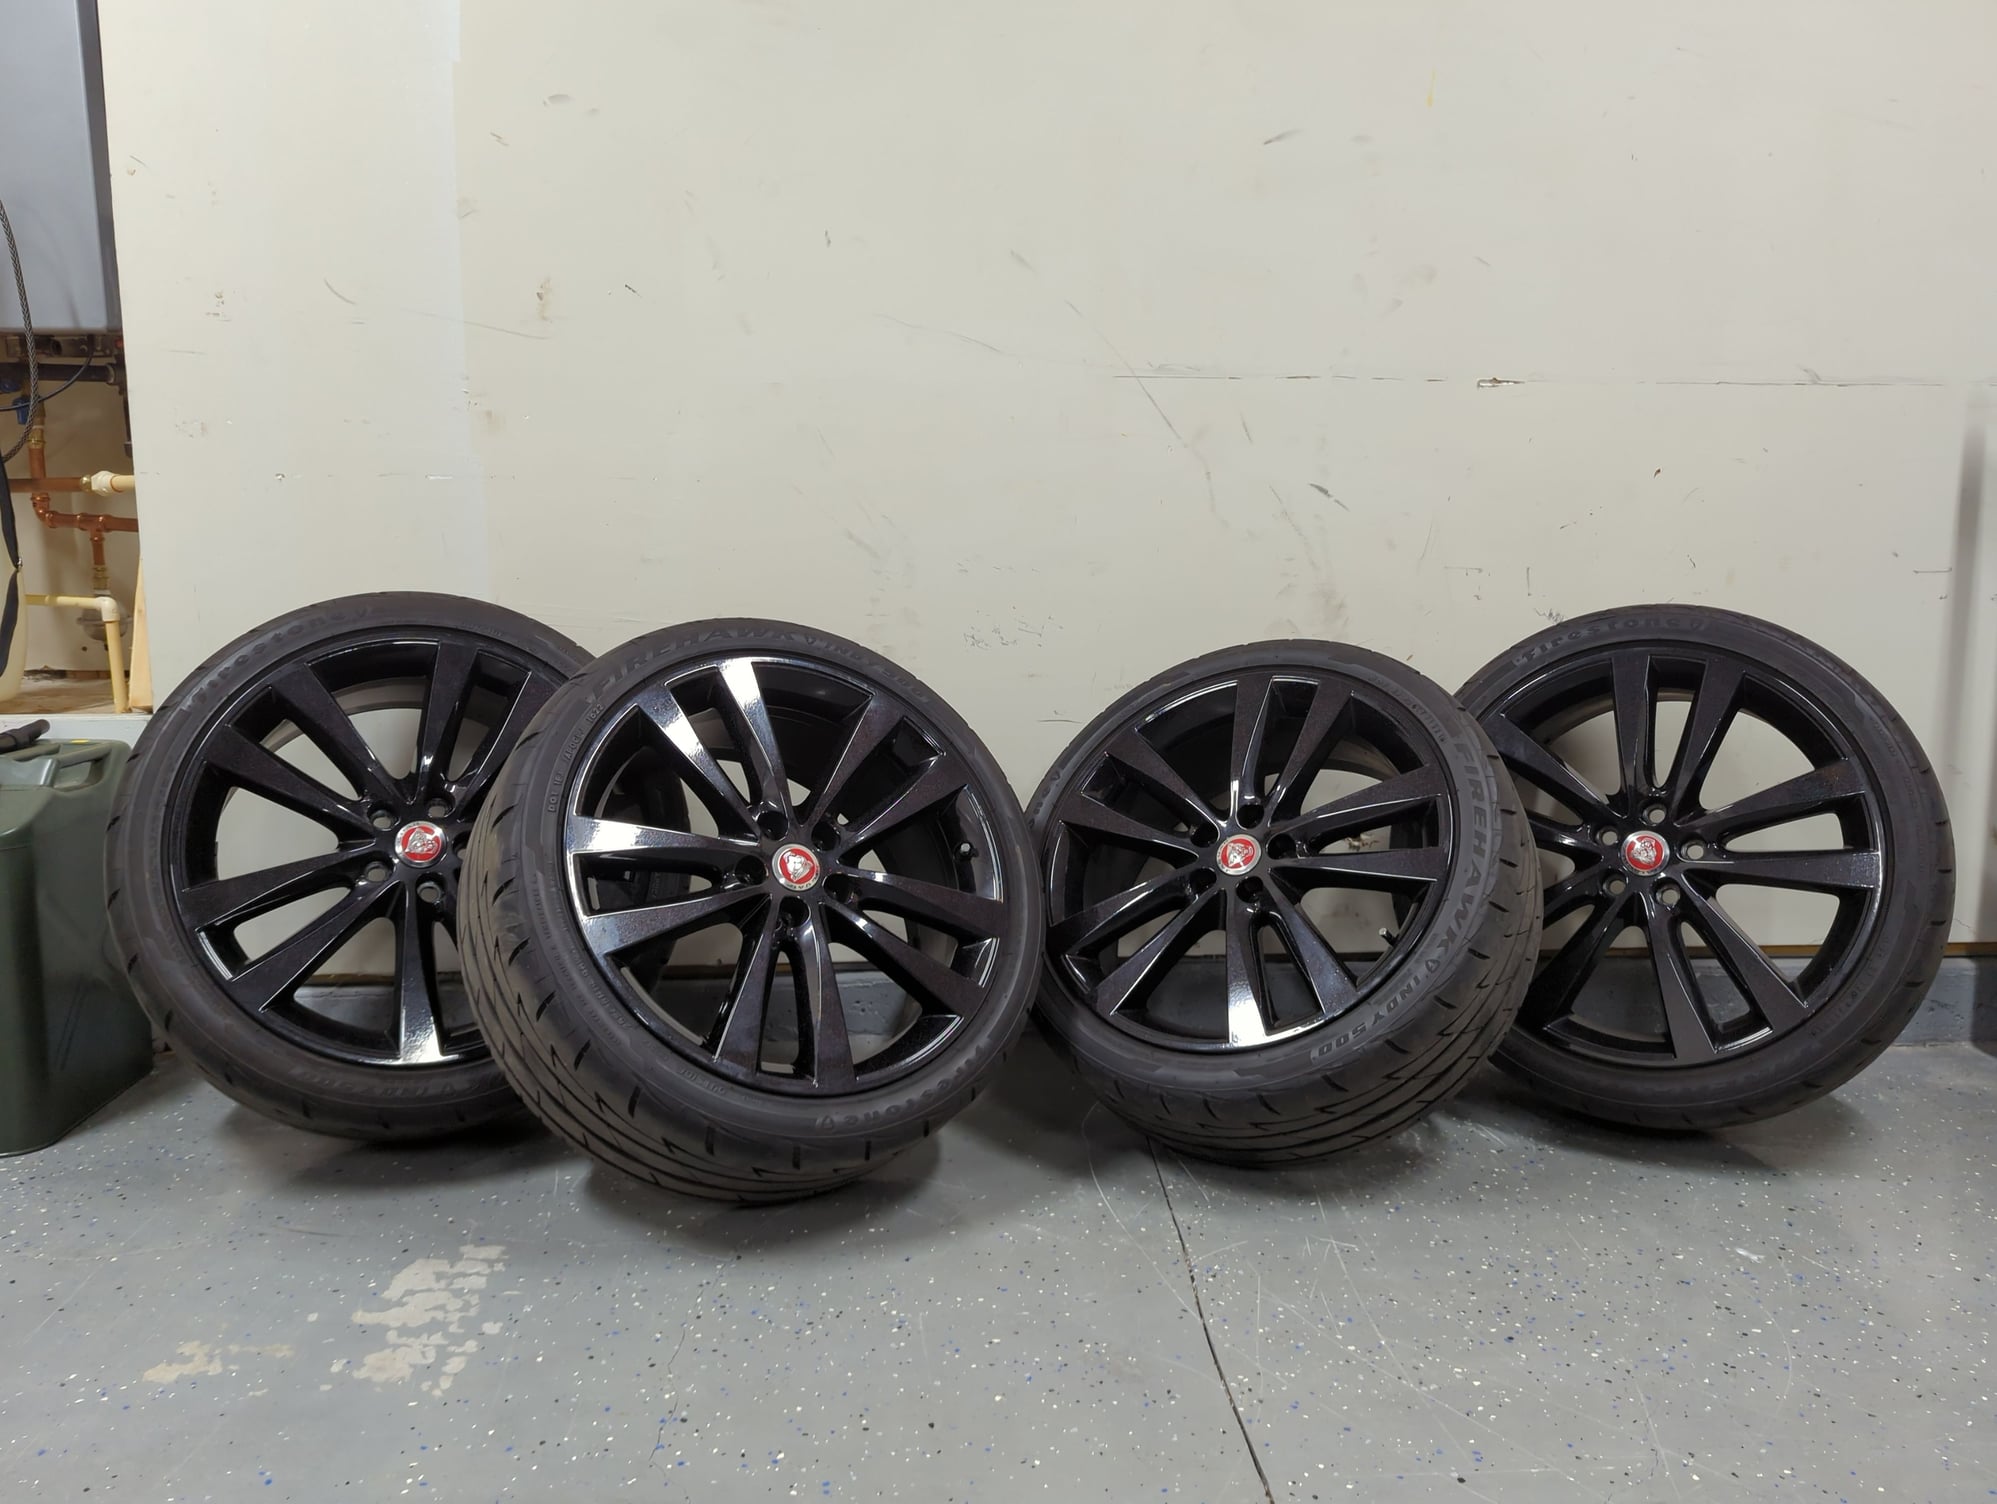 Wheels and Tires/Axles - XE AWD (X760) Custom 19" Venom staggered - Used - 2015 to 2020 Jaguar XE - Atlanta, GA 30046, United States